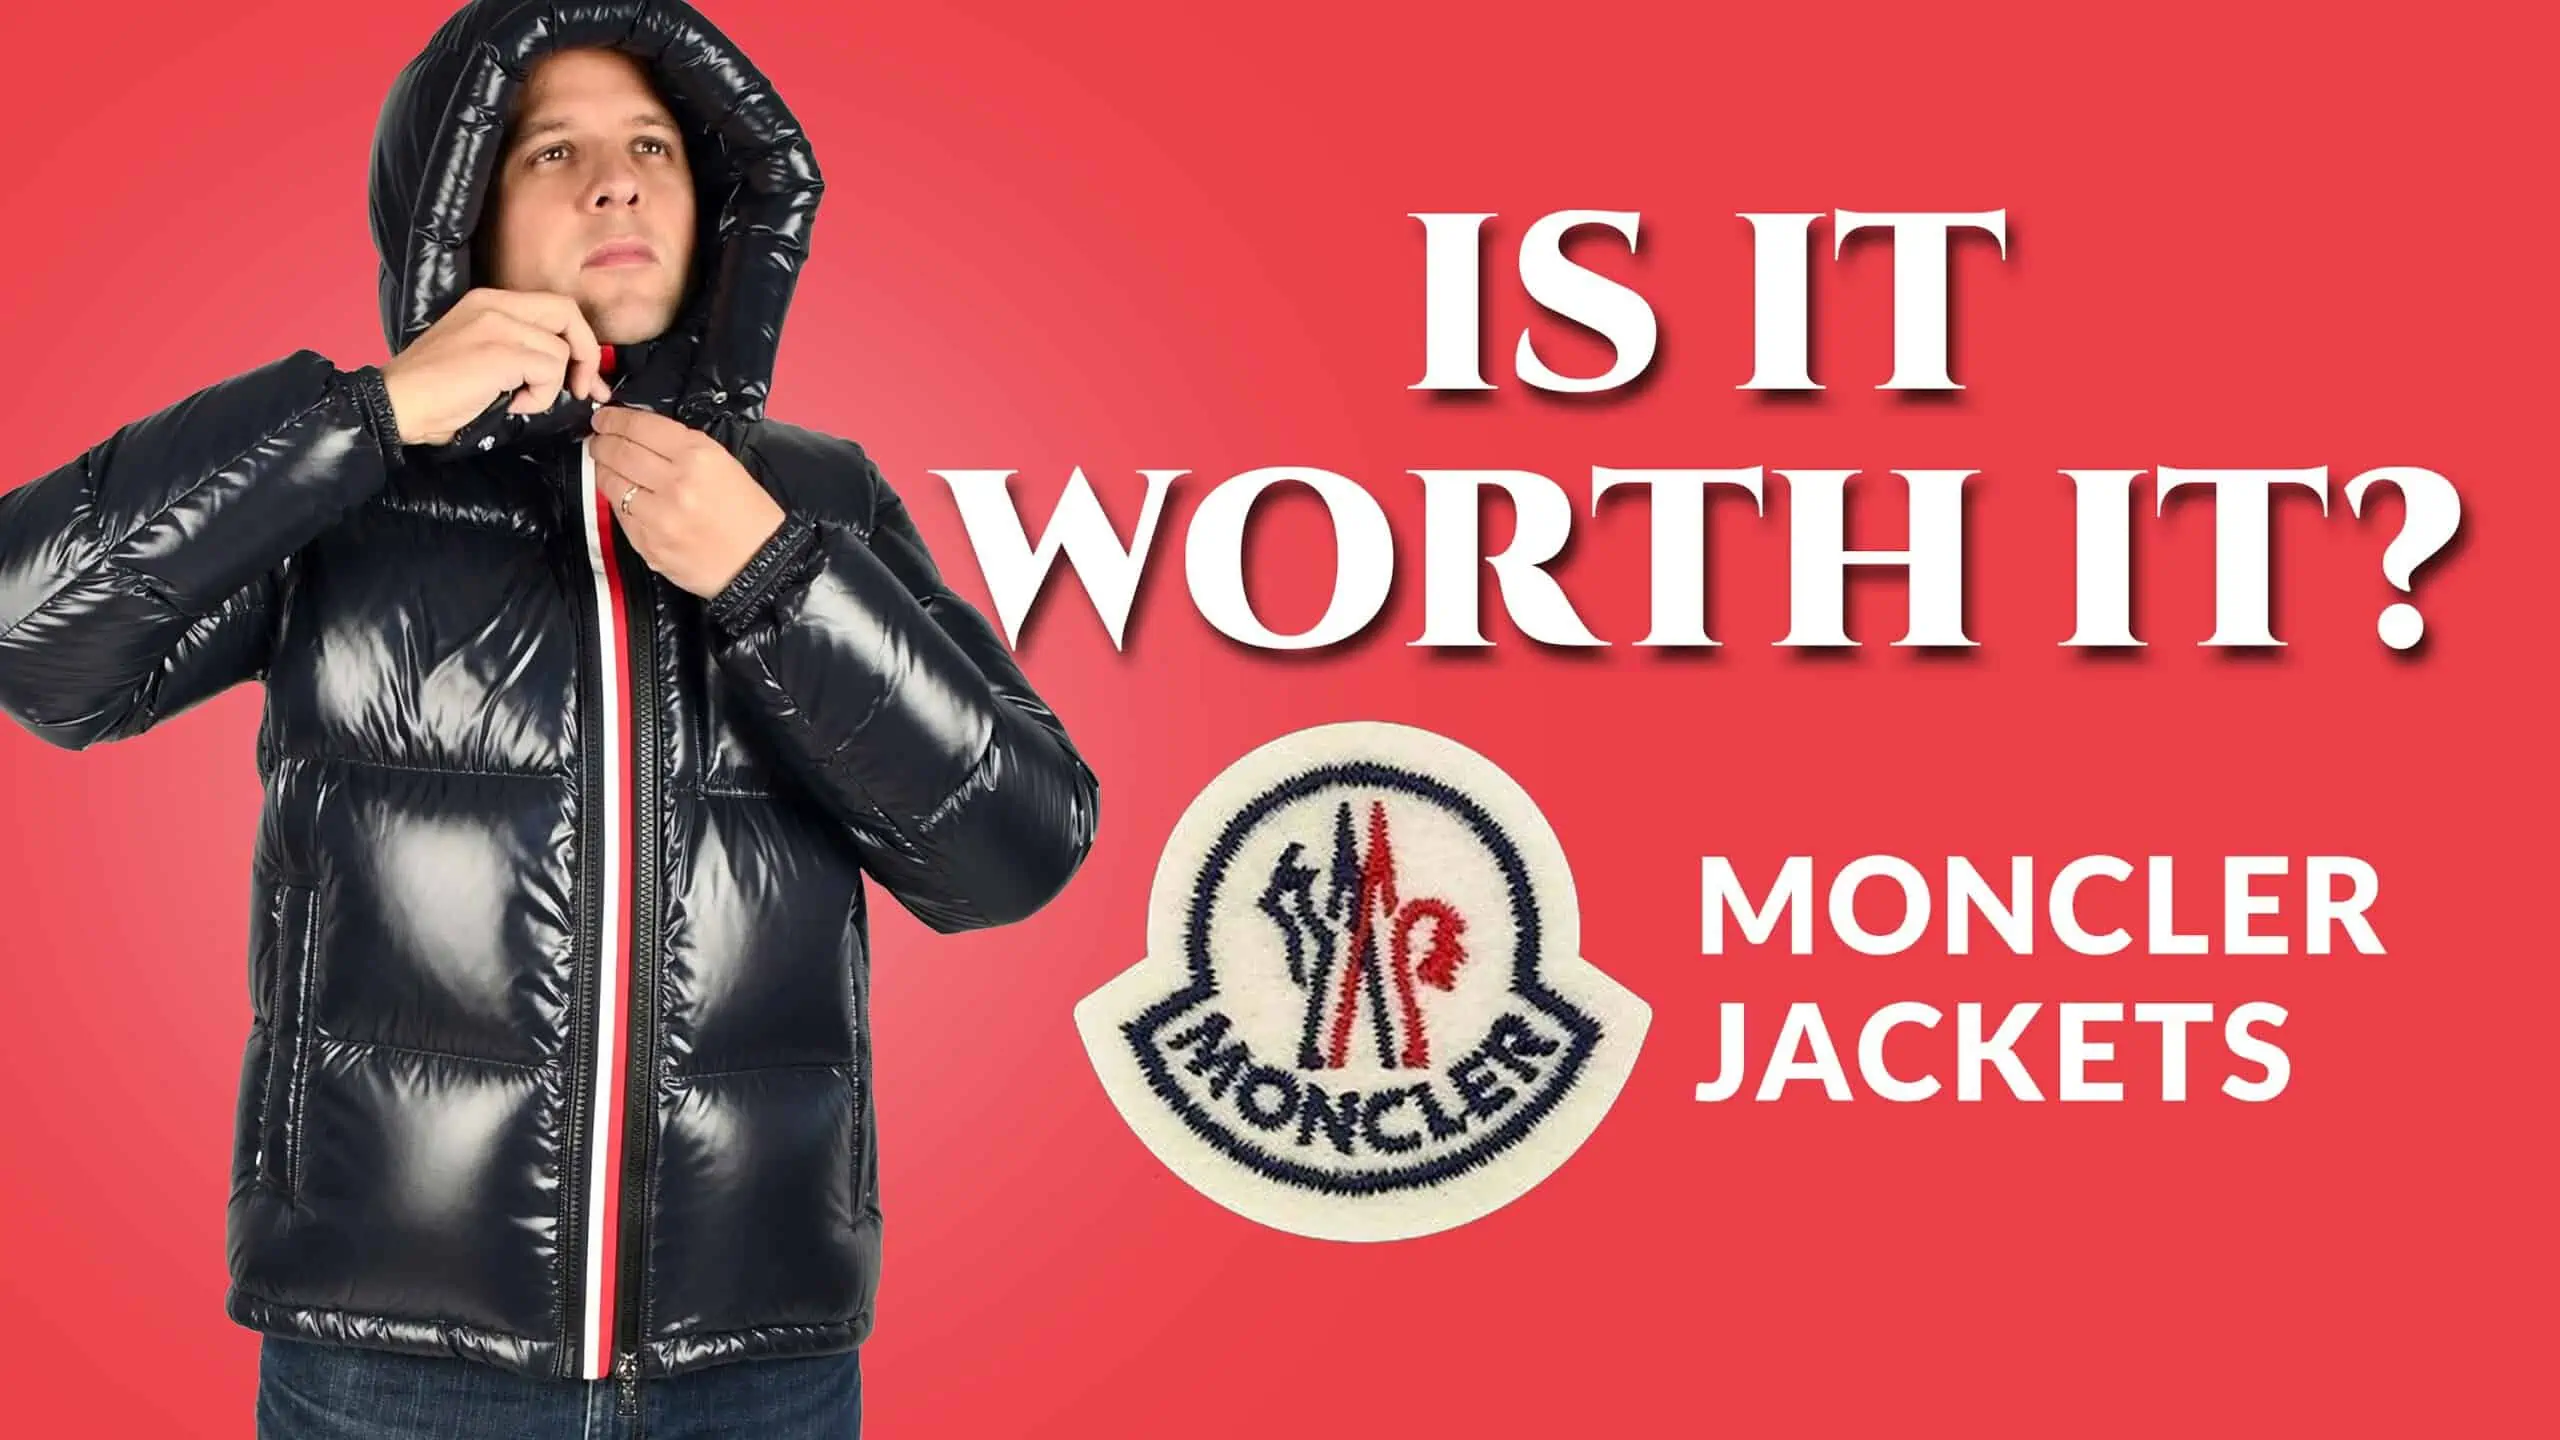 moncler jackets banner scaled